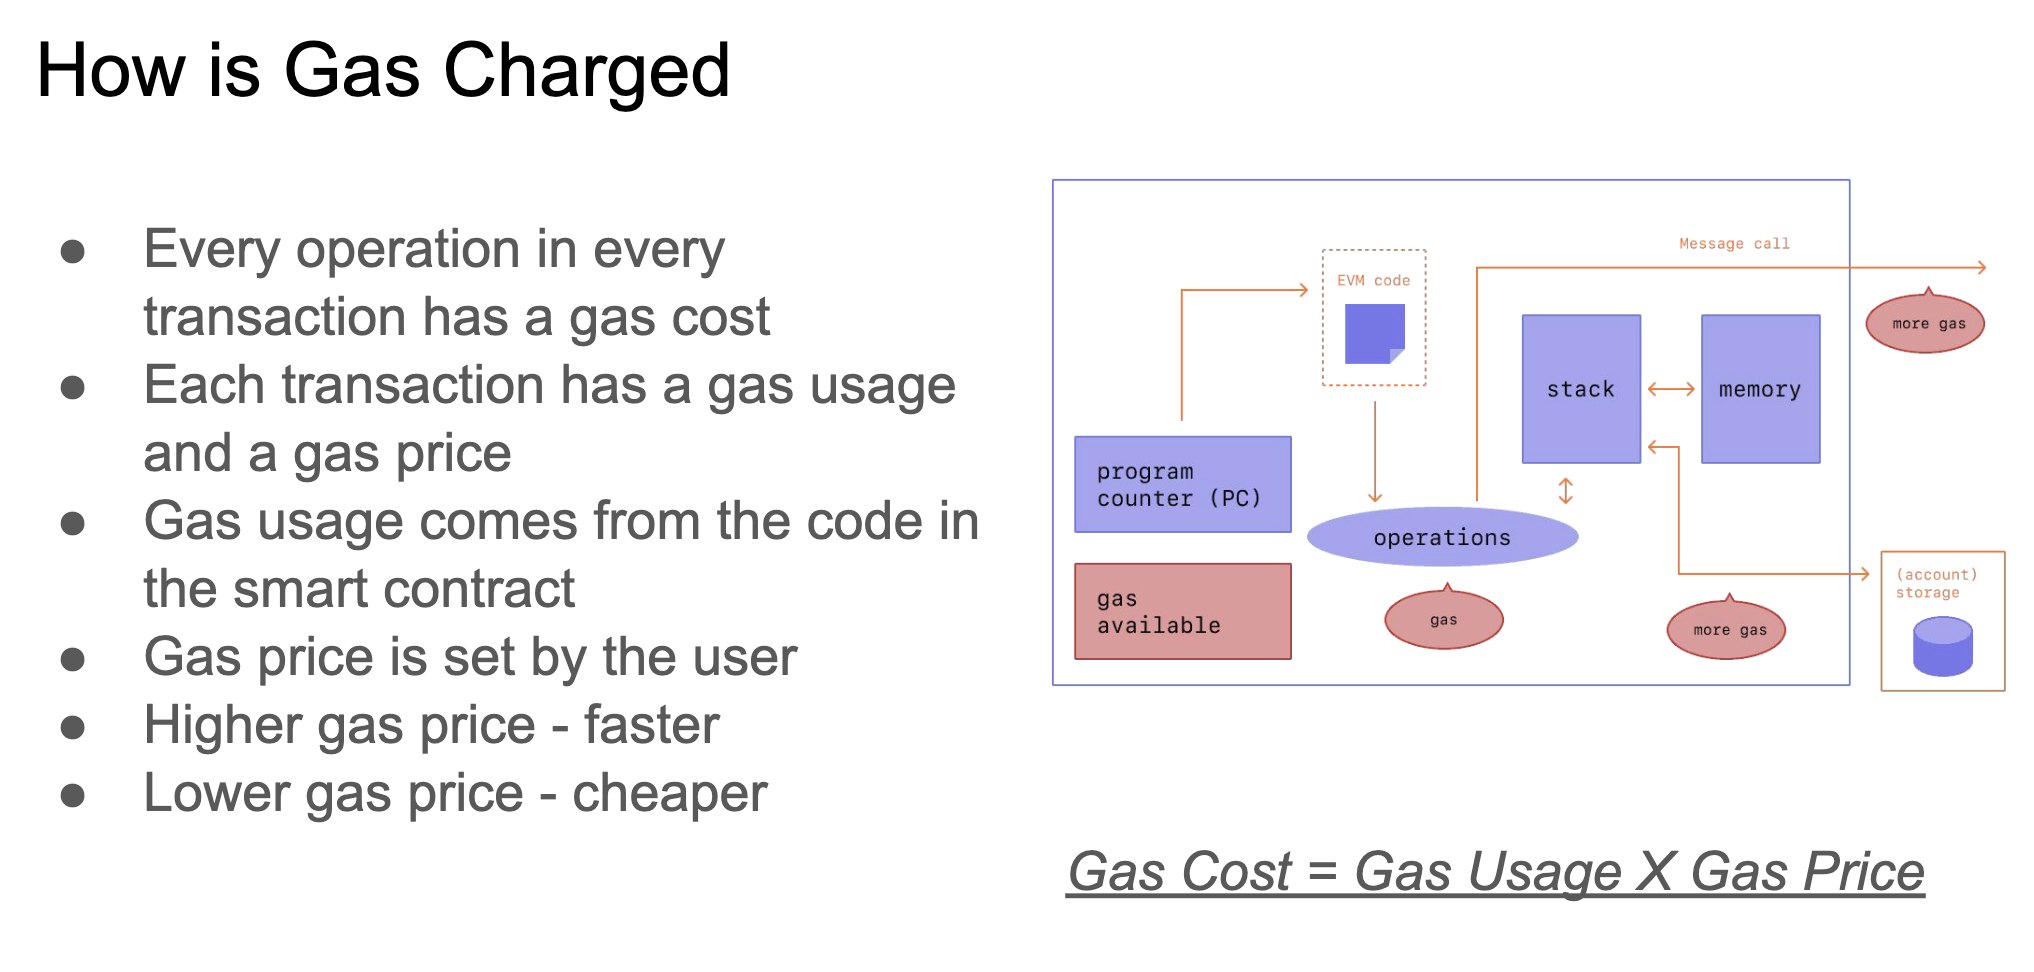 Gas Charge - From Doug Colkitt's Talk on EVM optimizations